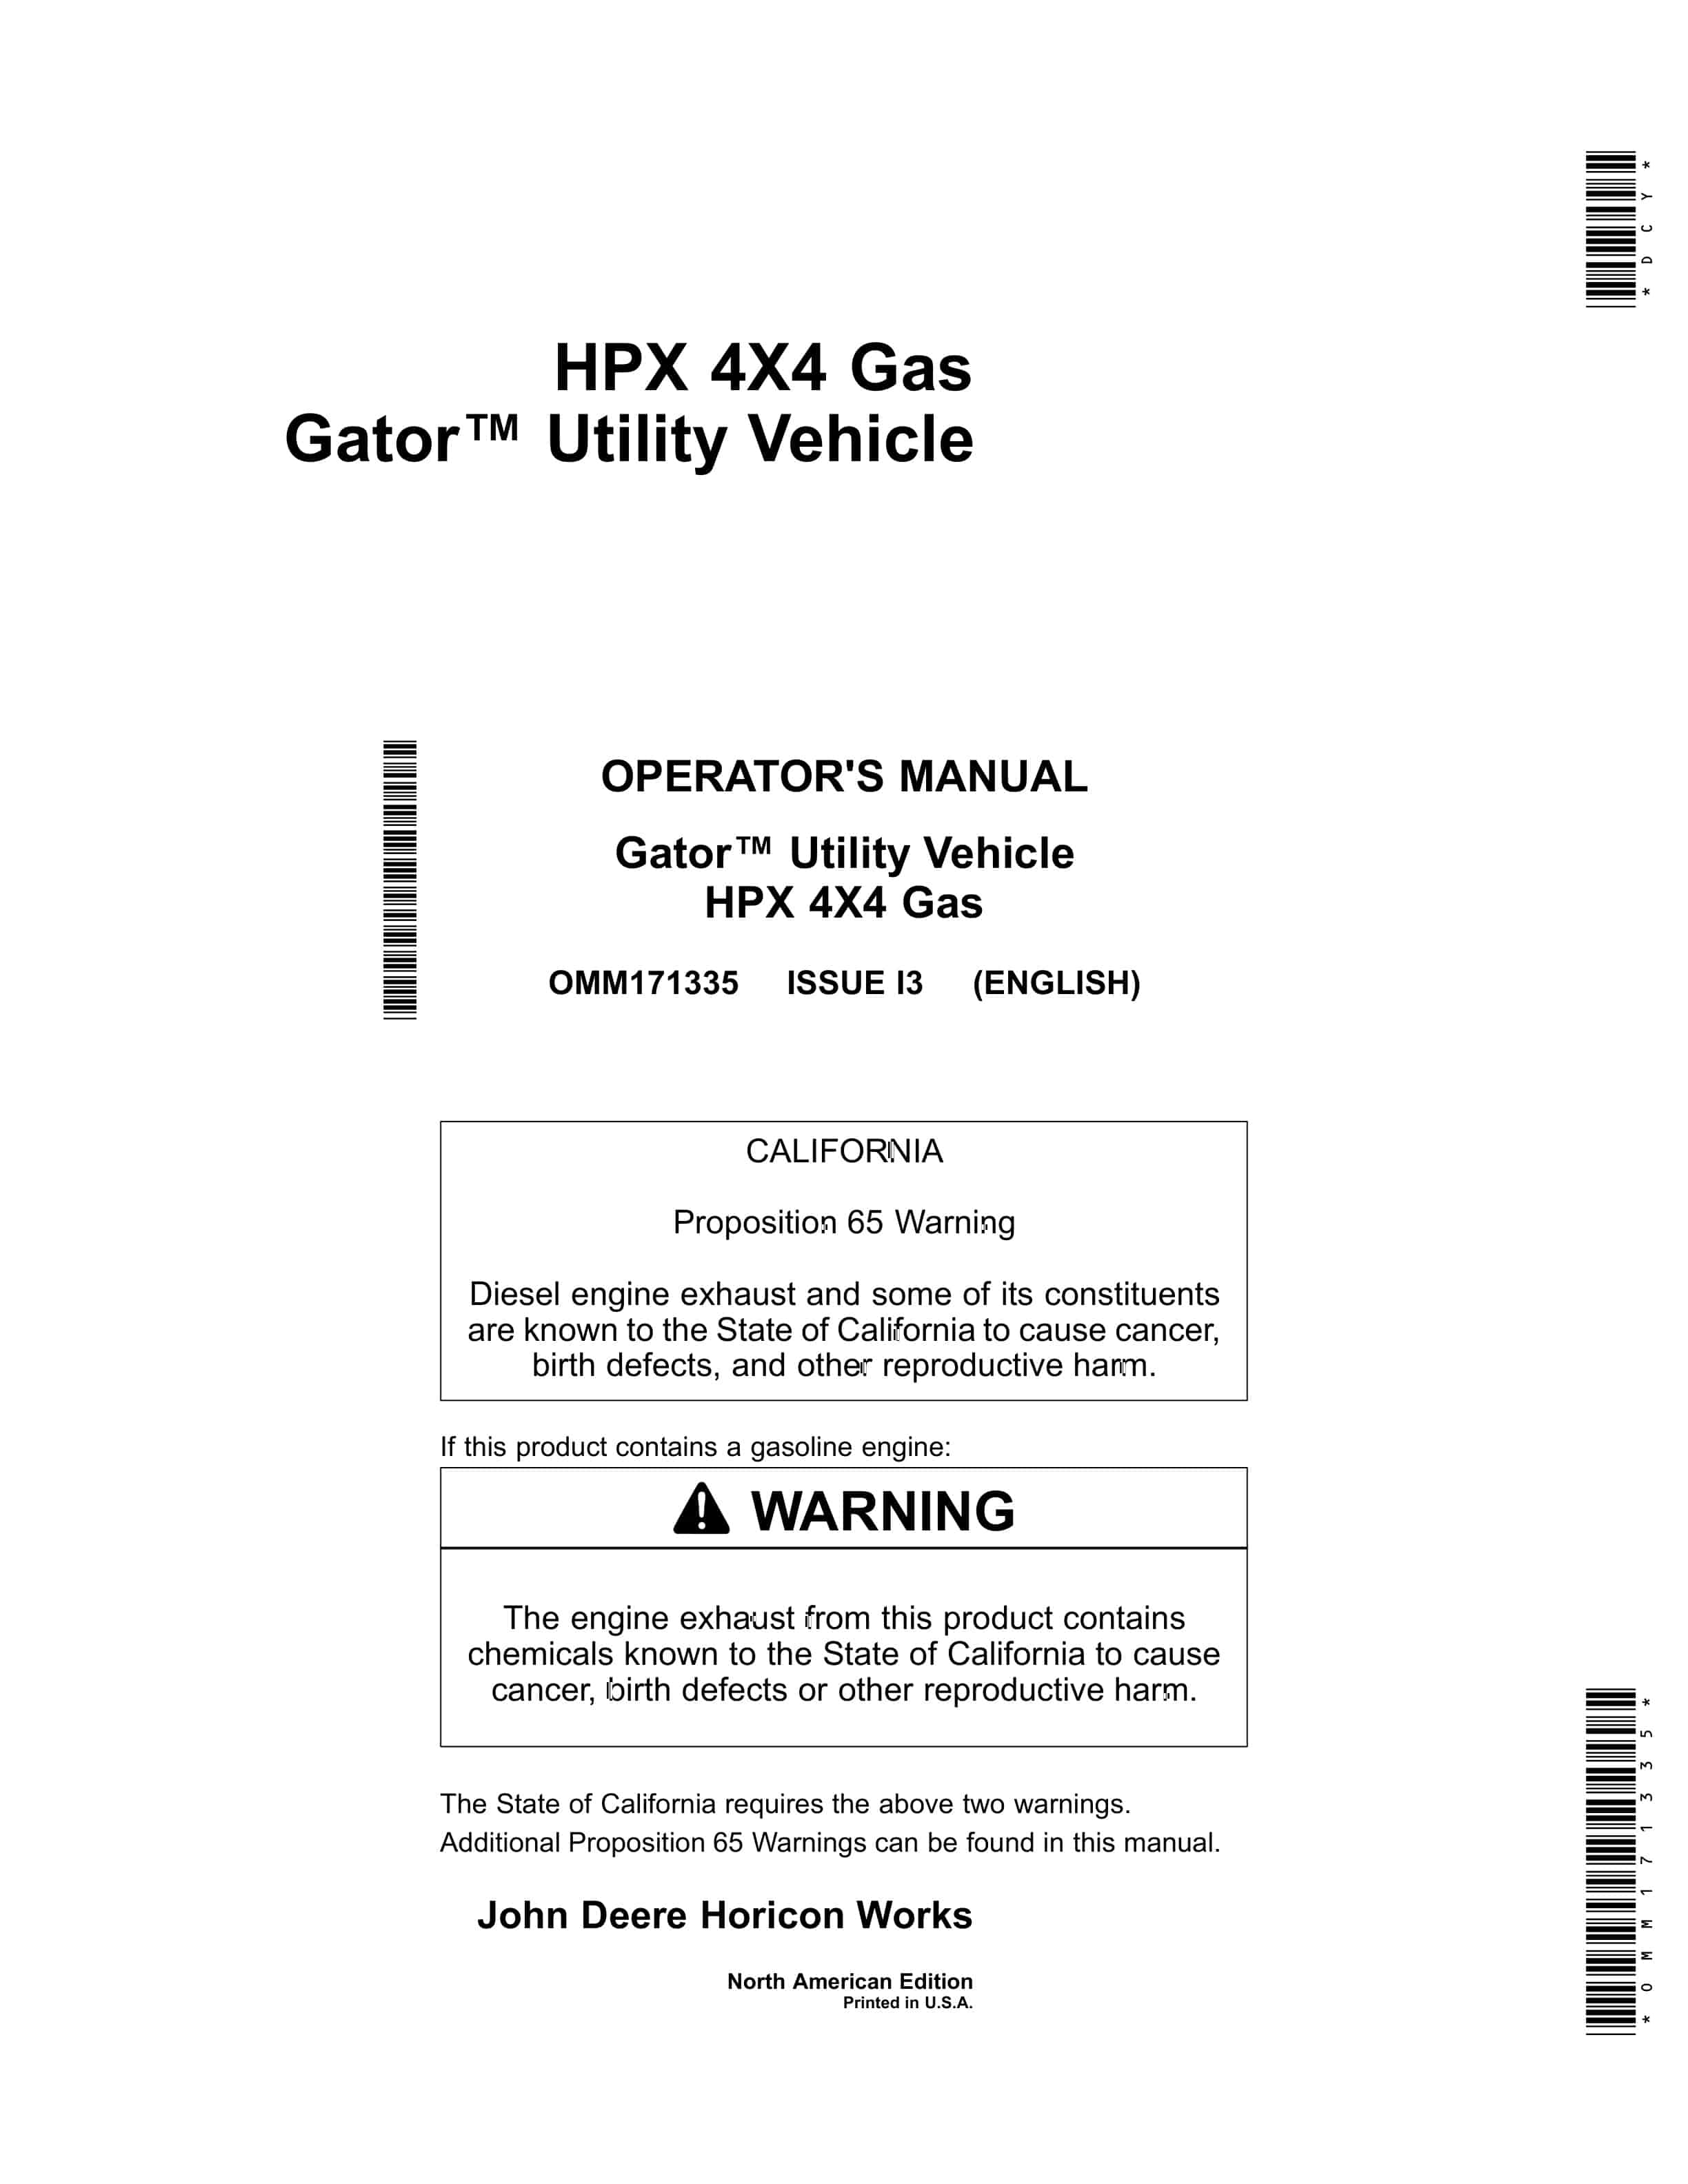 John Deere HPX 4X4 Gas Gator Utility Vehicles Operator Manual OMM171335 1